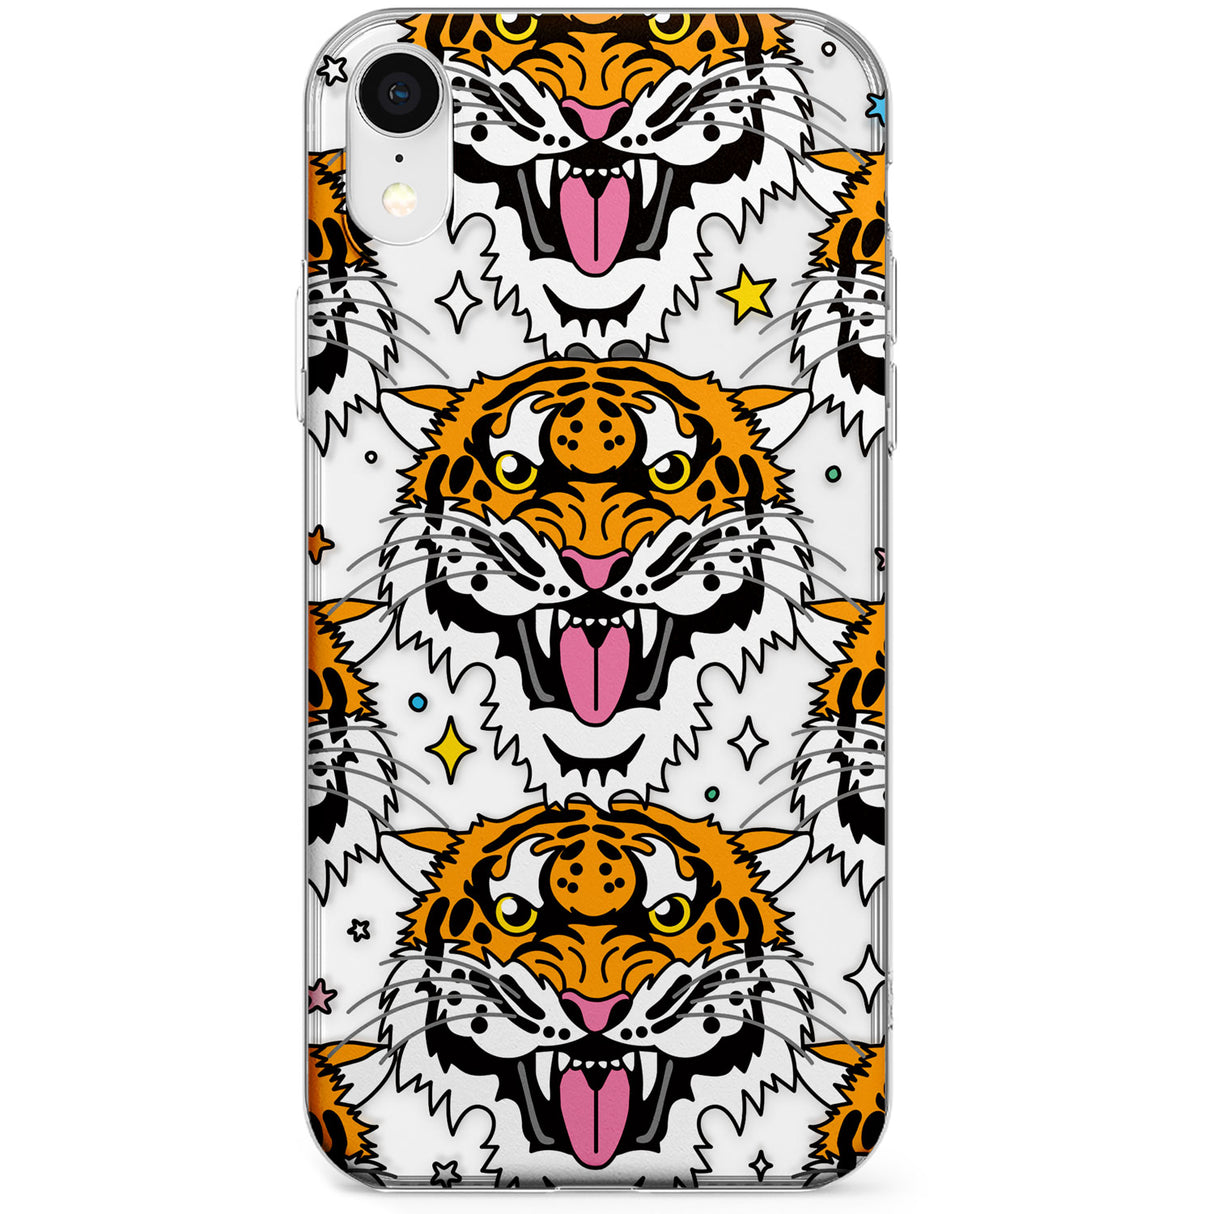 Fierce Jungle Tigers Phone Case for iPhone X, XS Max, XR